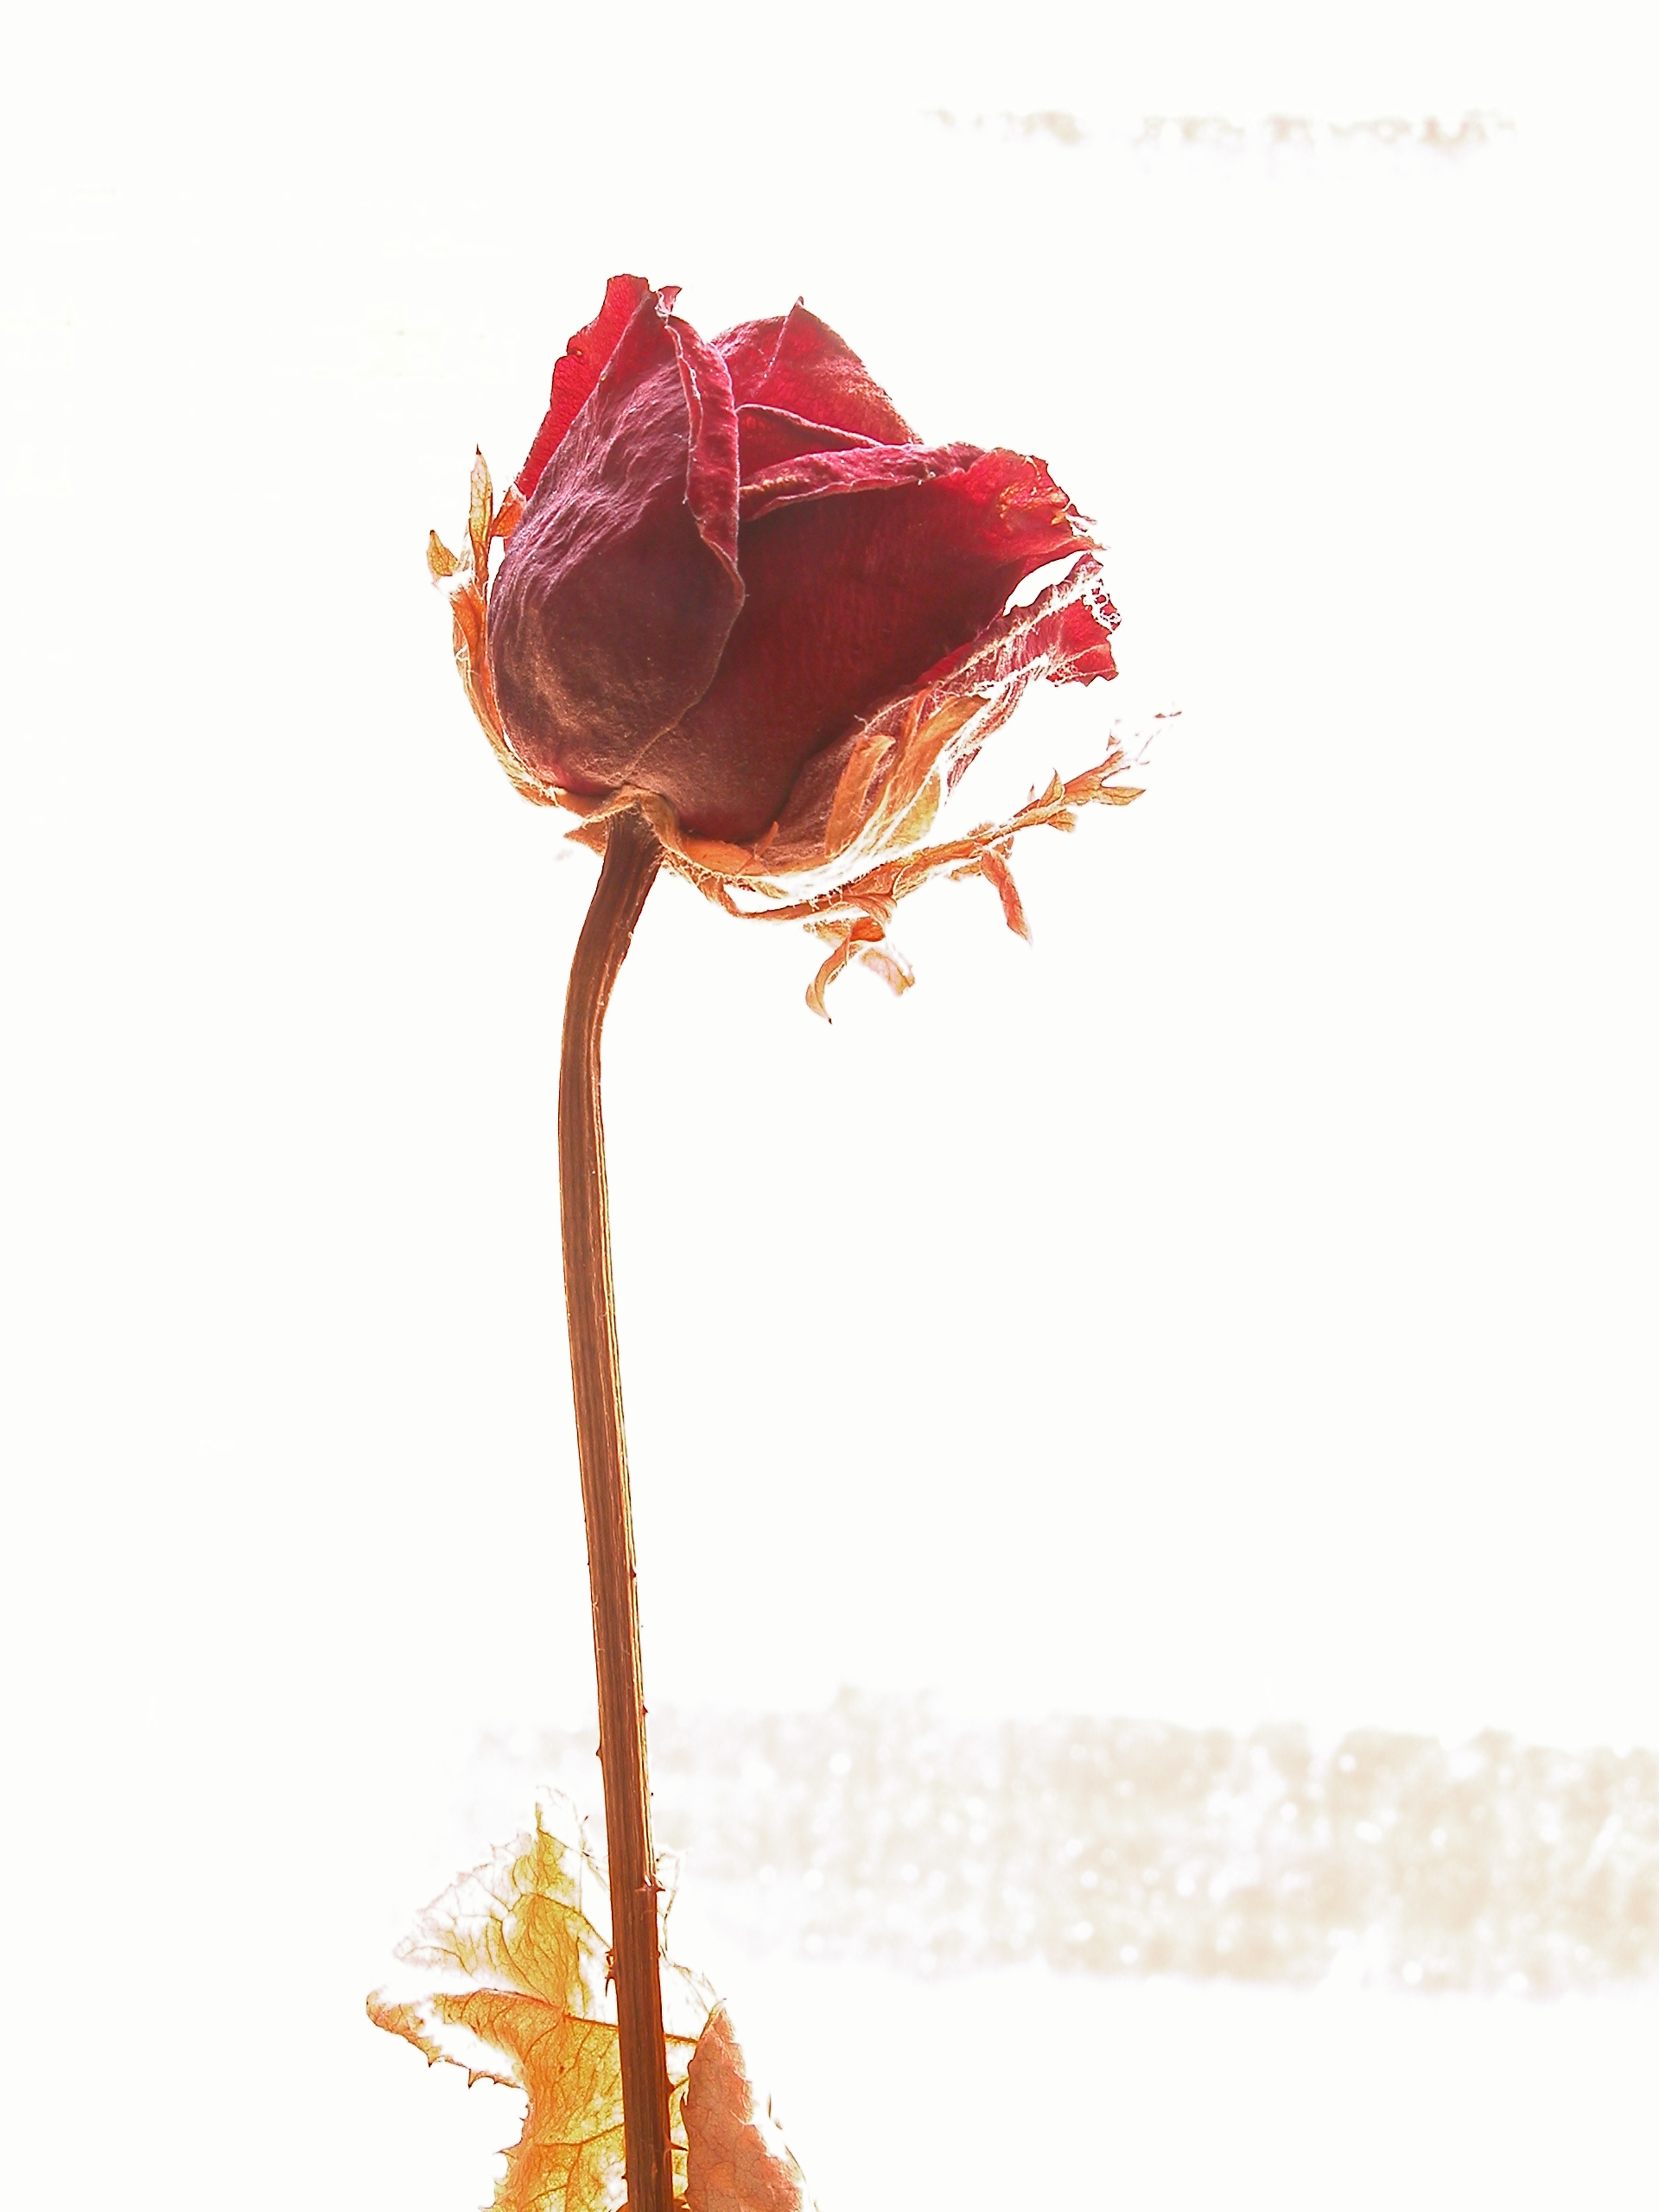 rose stem red flower petals stick dried dead